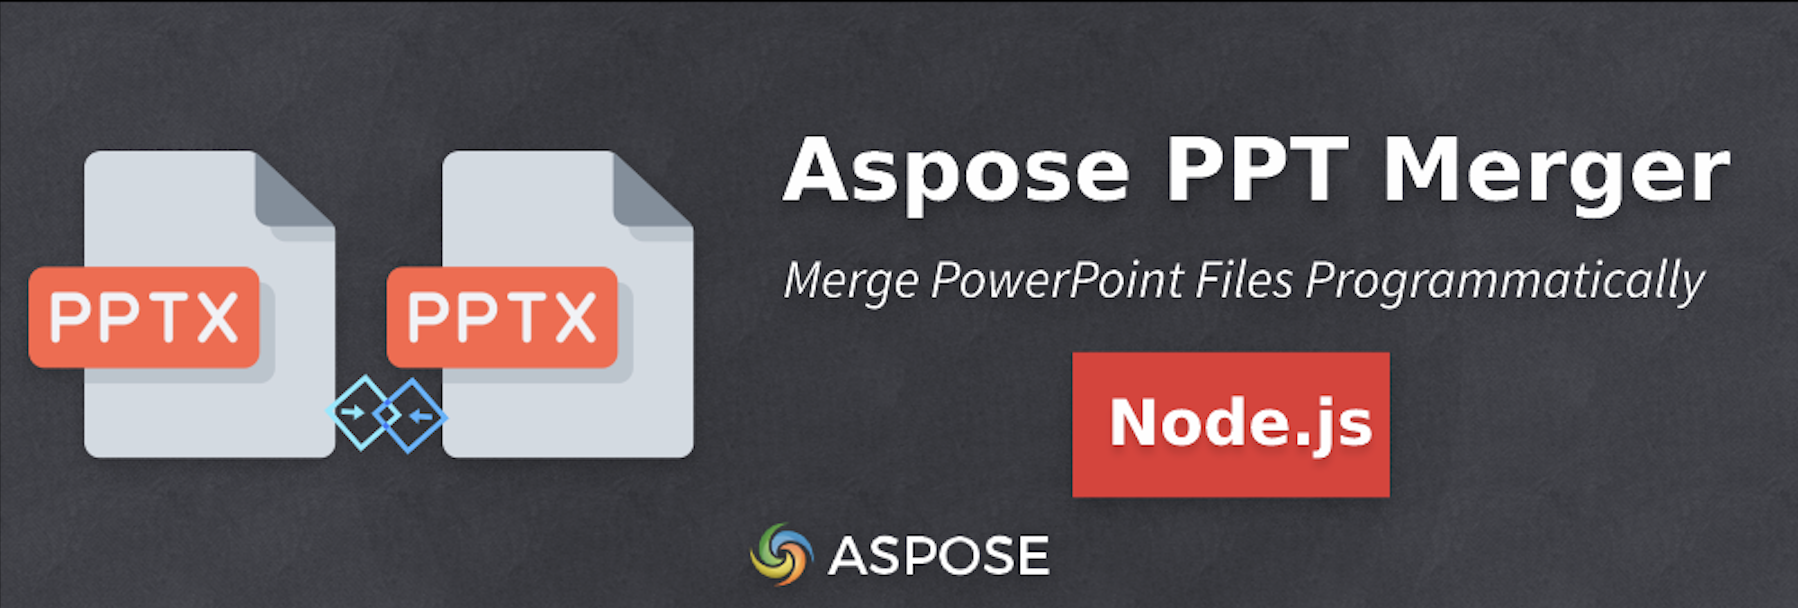 Kombinieren Sie mehrere PowerPoints in Node.js – Aspose PPT Merger